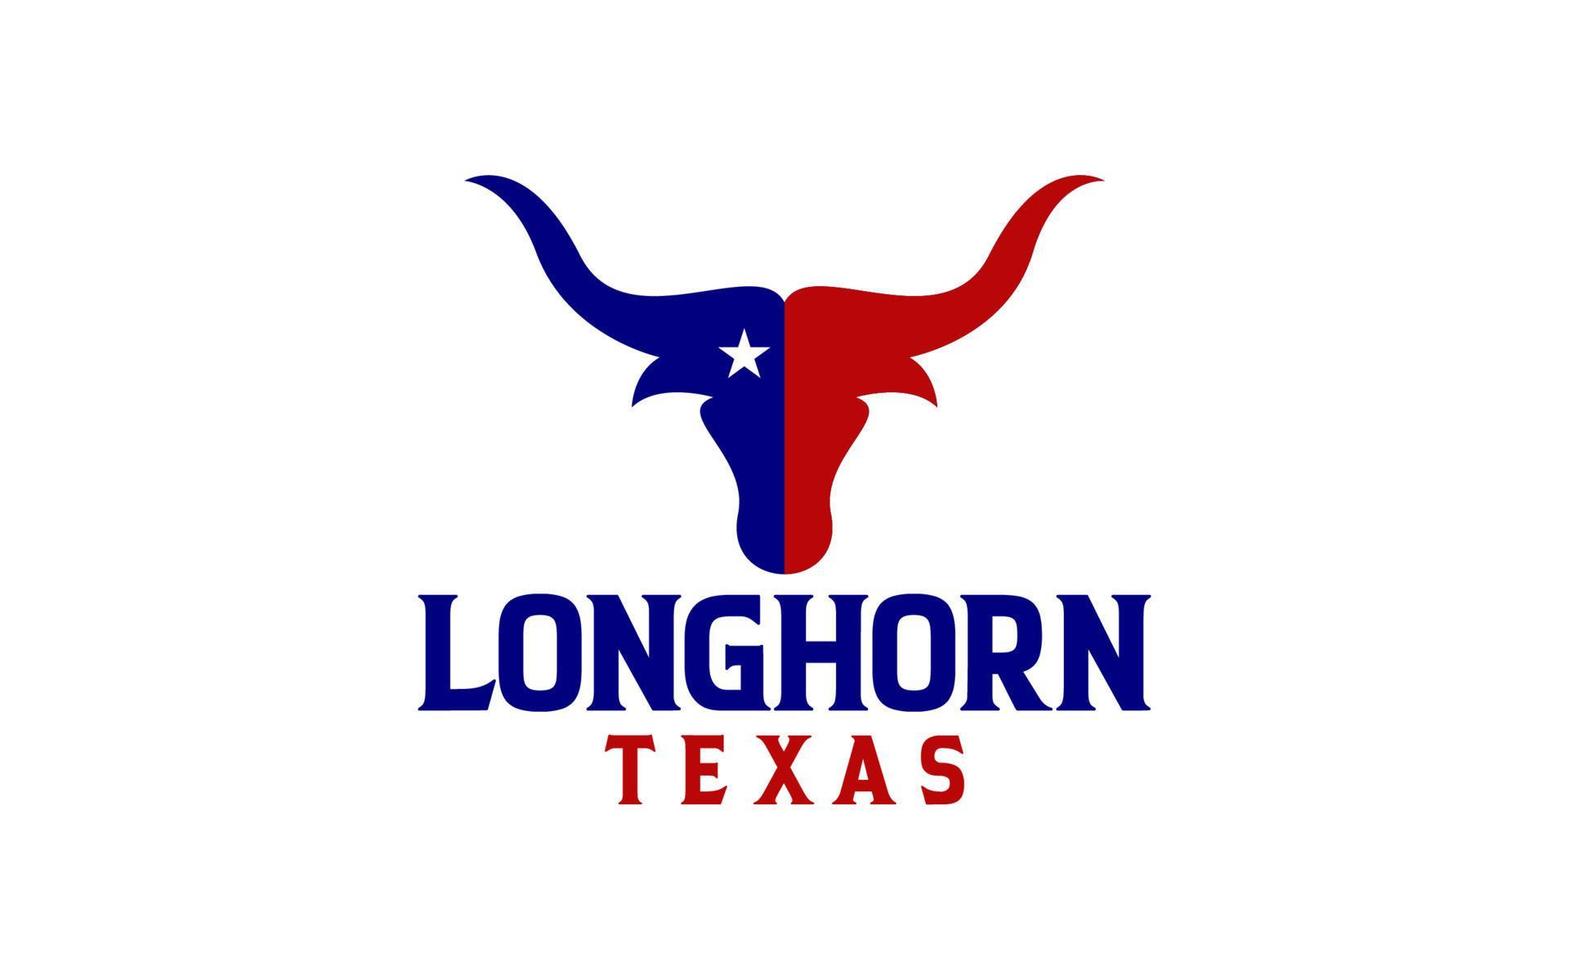 Vintage Label Texas Longhorn Kuh vektor